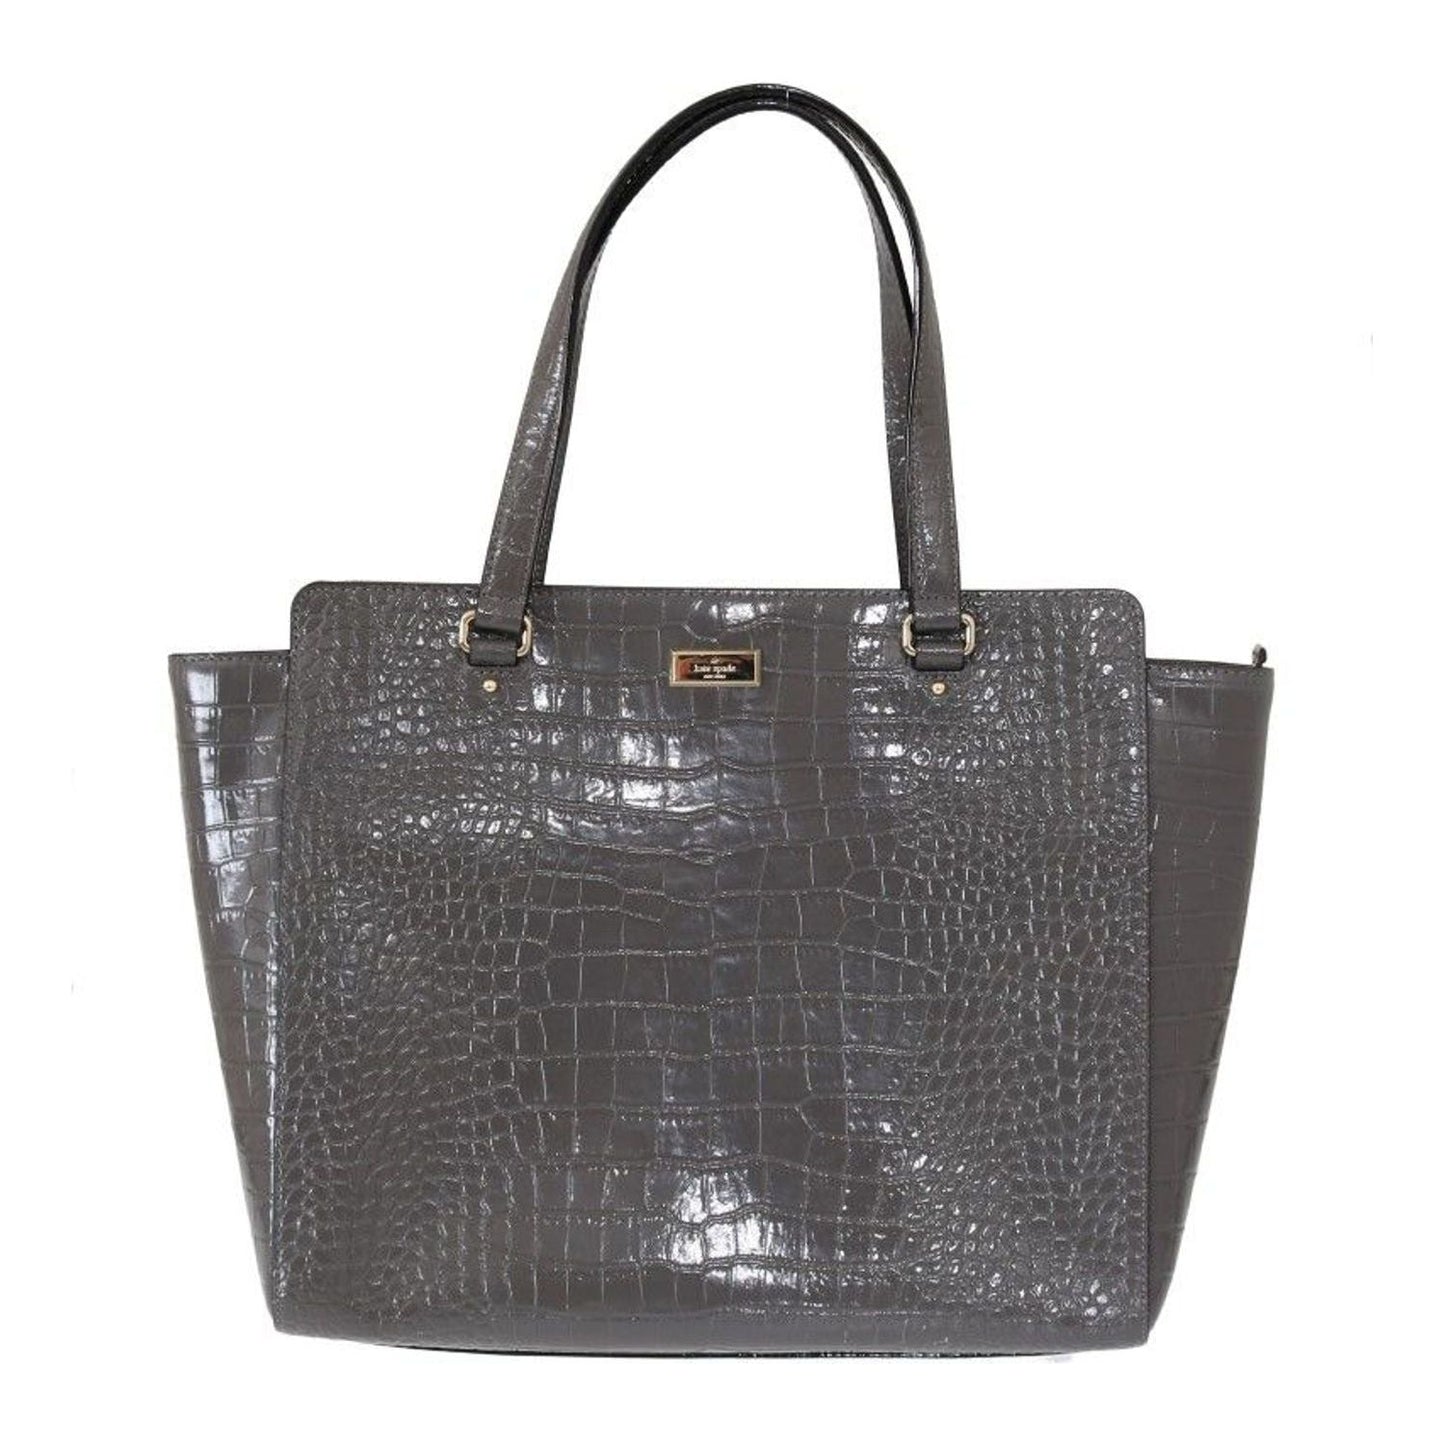 Kate Spade Chic Elissa Gray Leather Handbag WOMAN HANDBAG gray-elissa-bristol-drive-croc-hand-bag IMG_9246-Medium-d83e8c4f-cb3.jpg